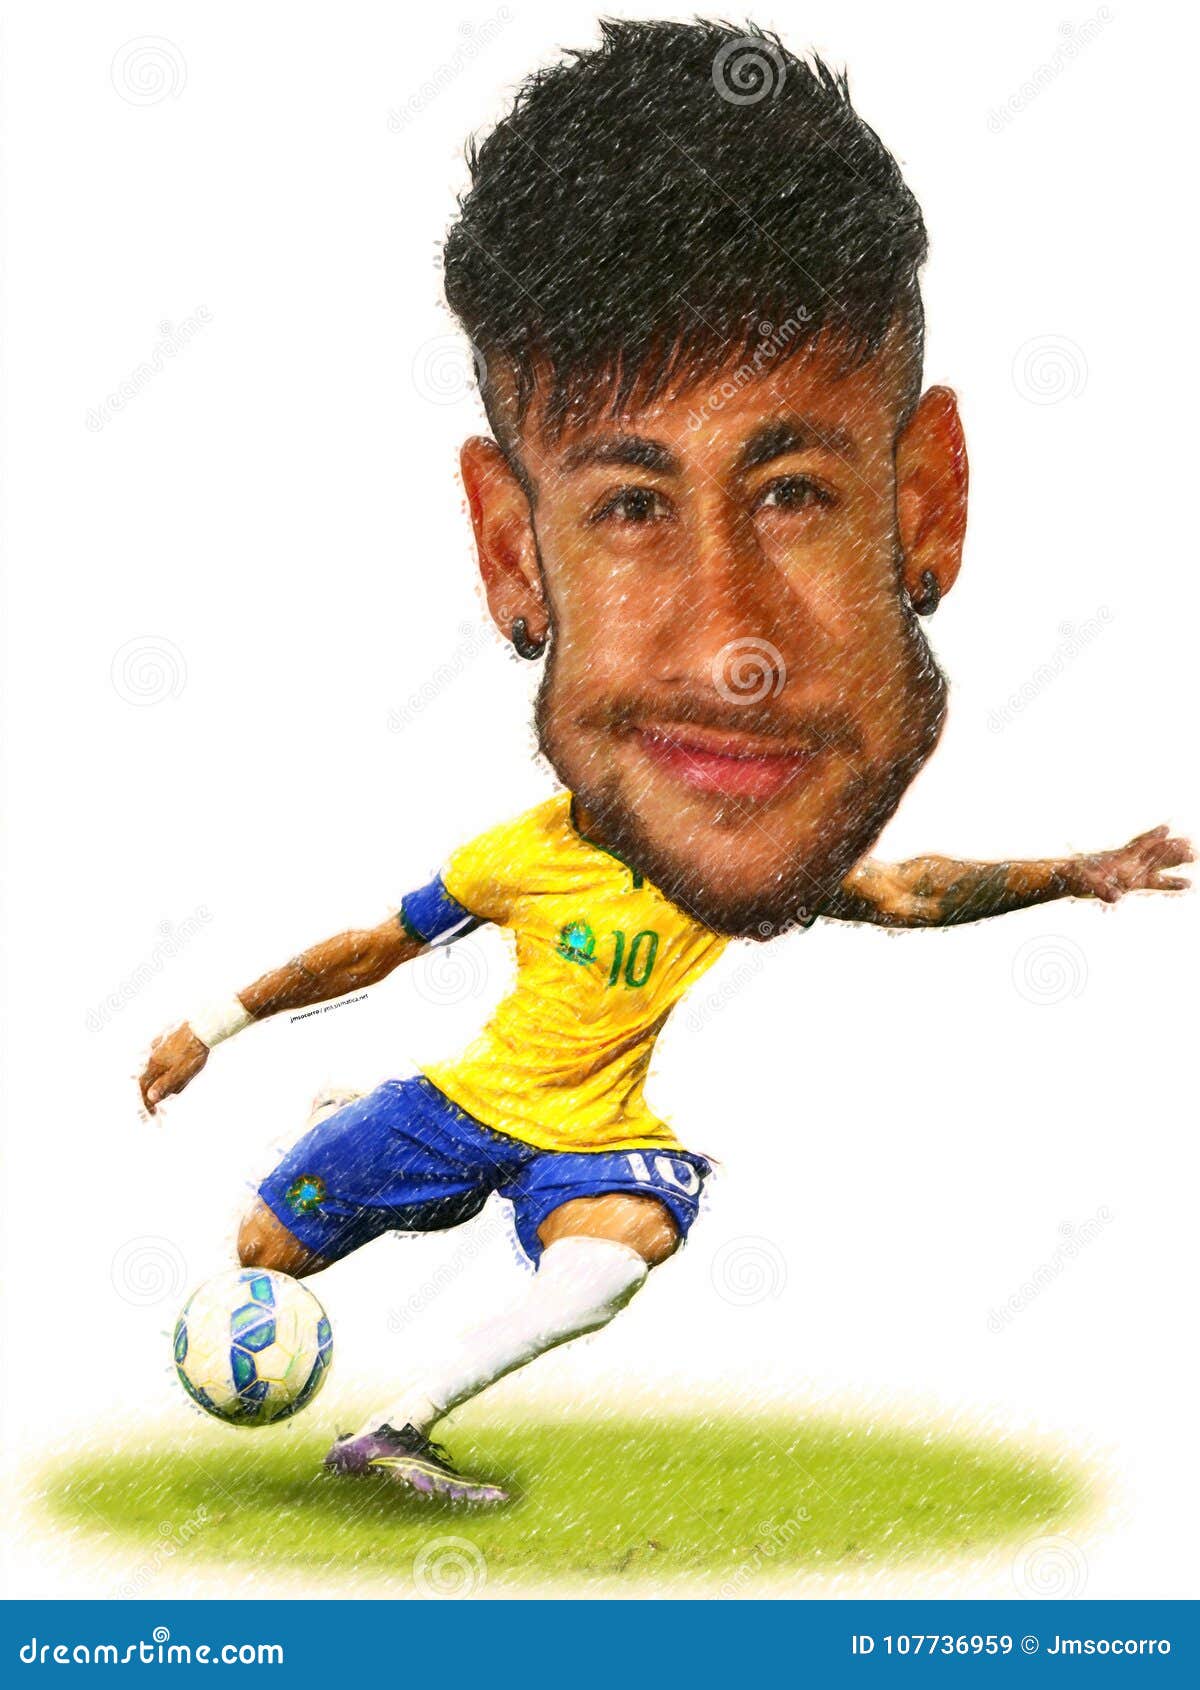 Cartoon of Neymar Forward of Brazil National Team Editorial Stock Image -  Illustration of rusia, footballer: 107736959